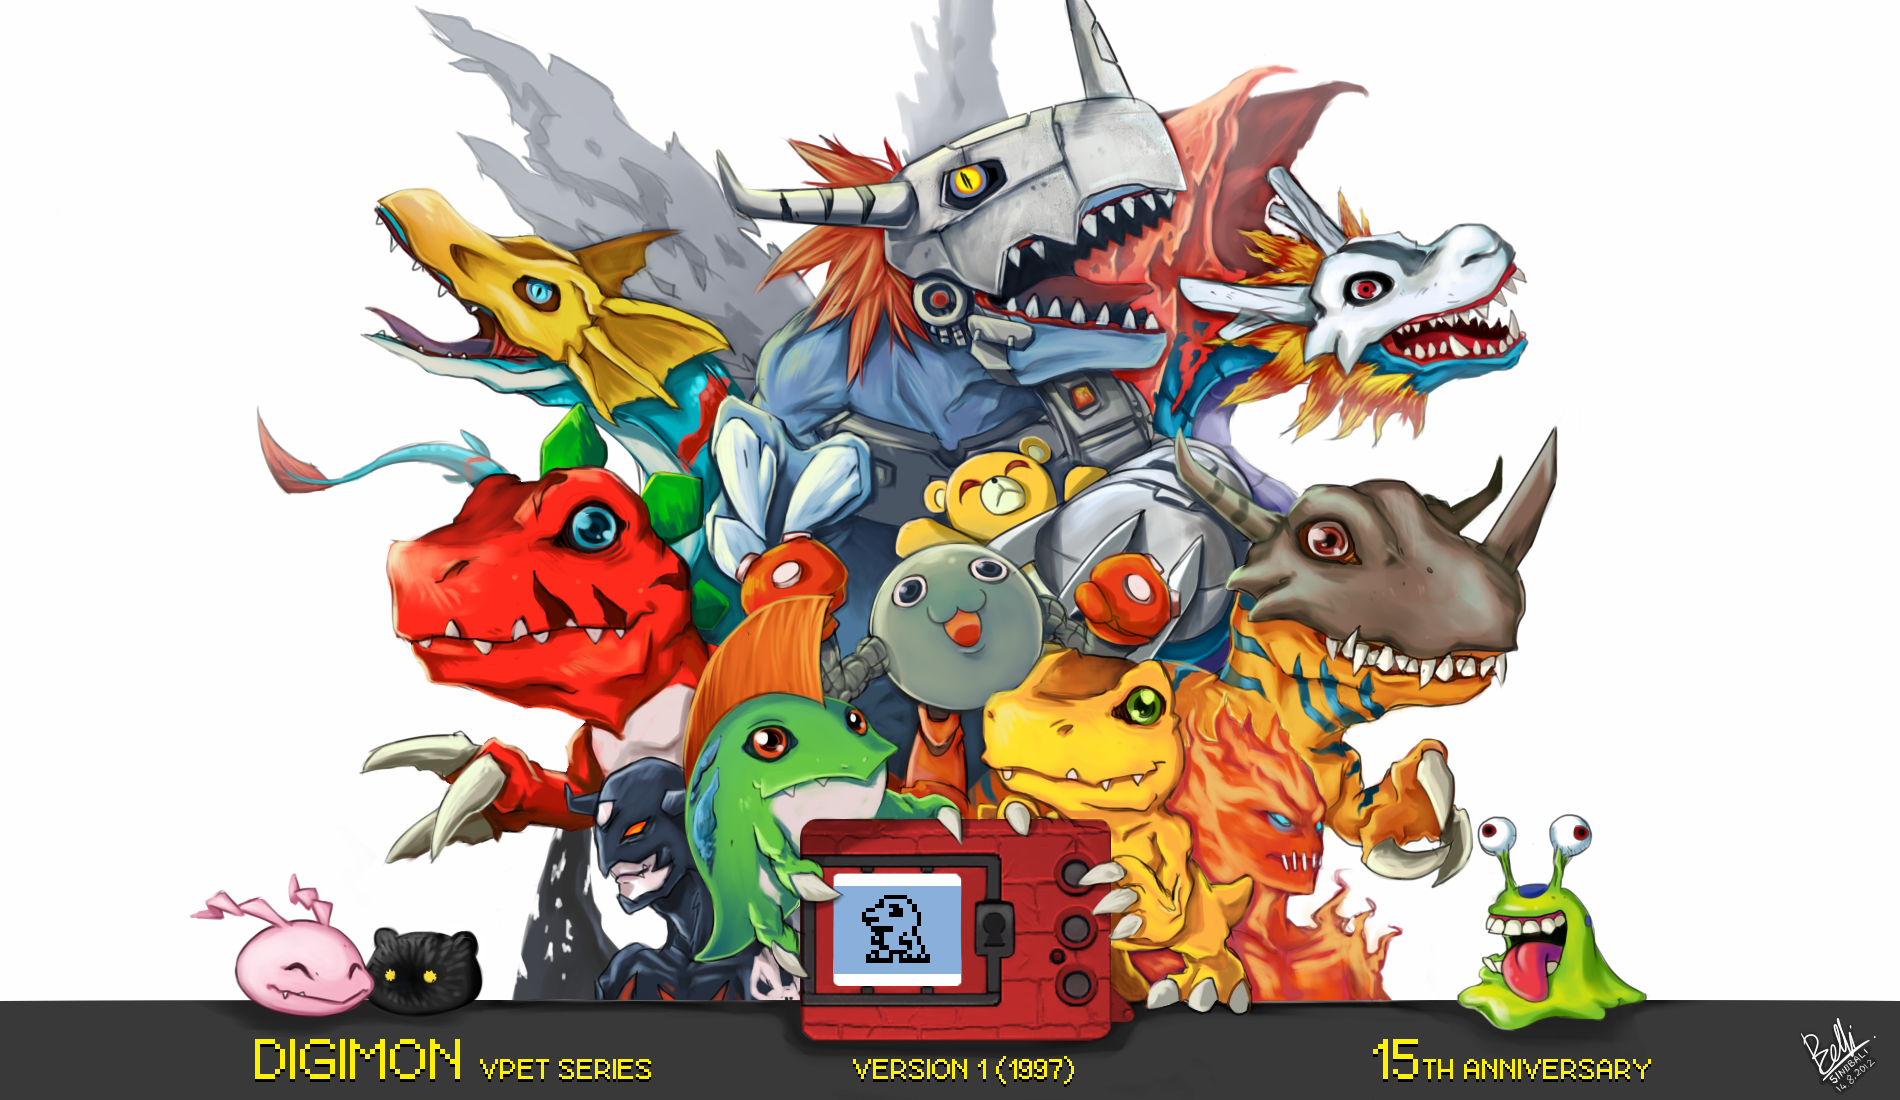 Category:Digimon Digimon Masters Wiki | Fandom